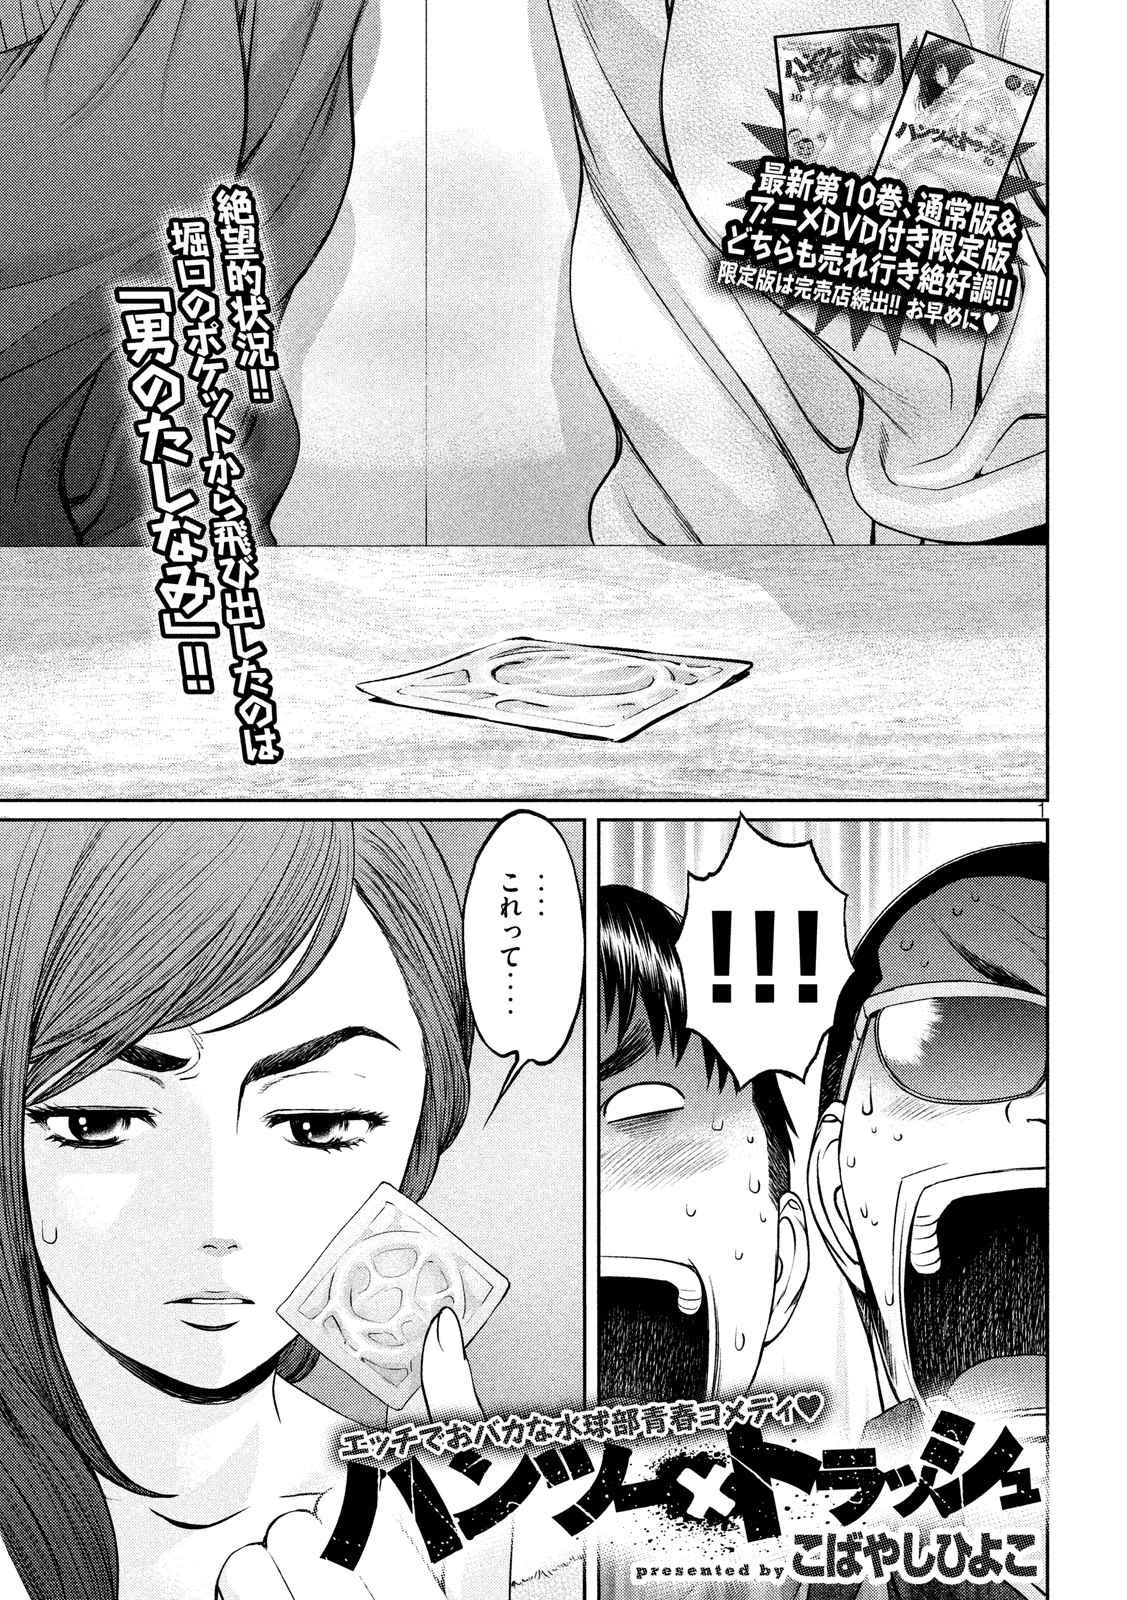 Hantsu x Trash - Chapter 122 - Page 1